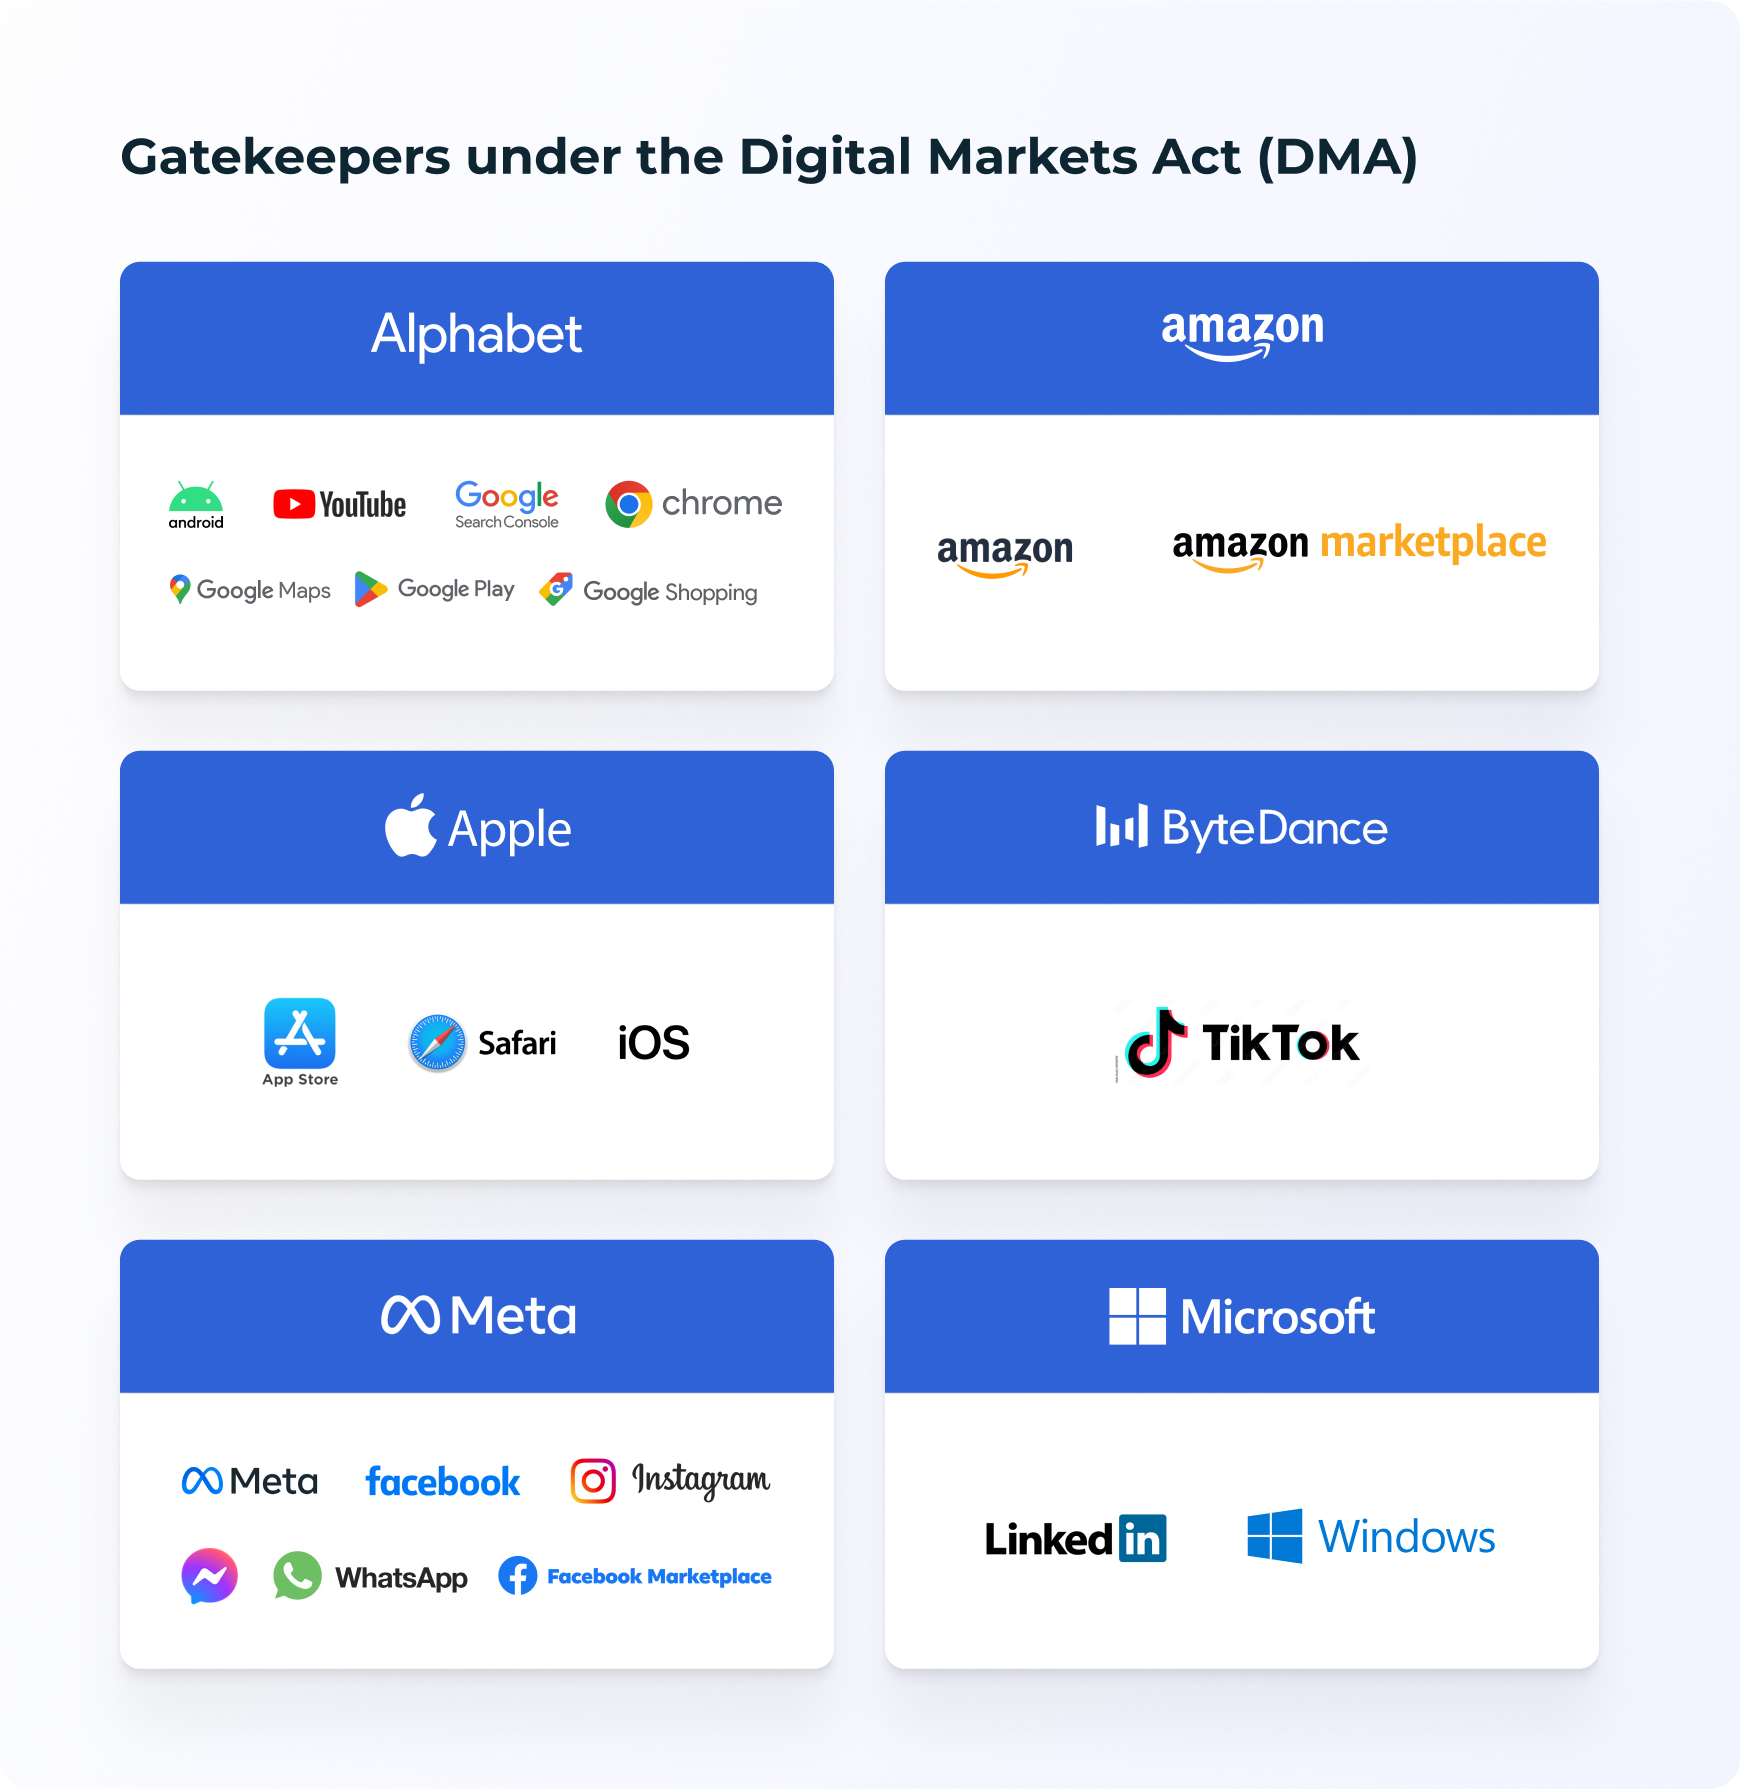 Didomi - Digital Markets Act (DMA) Gatekeepers